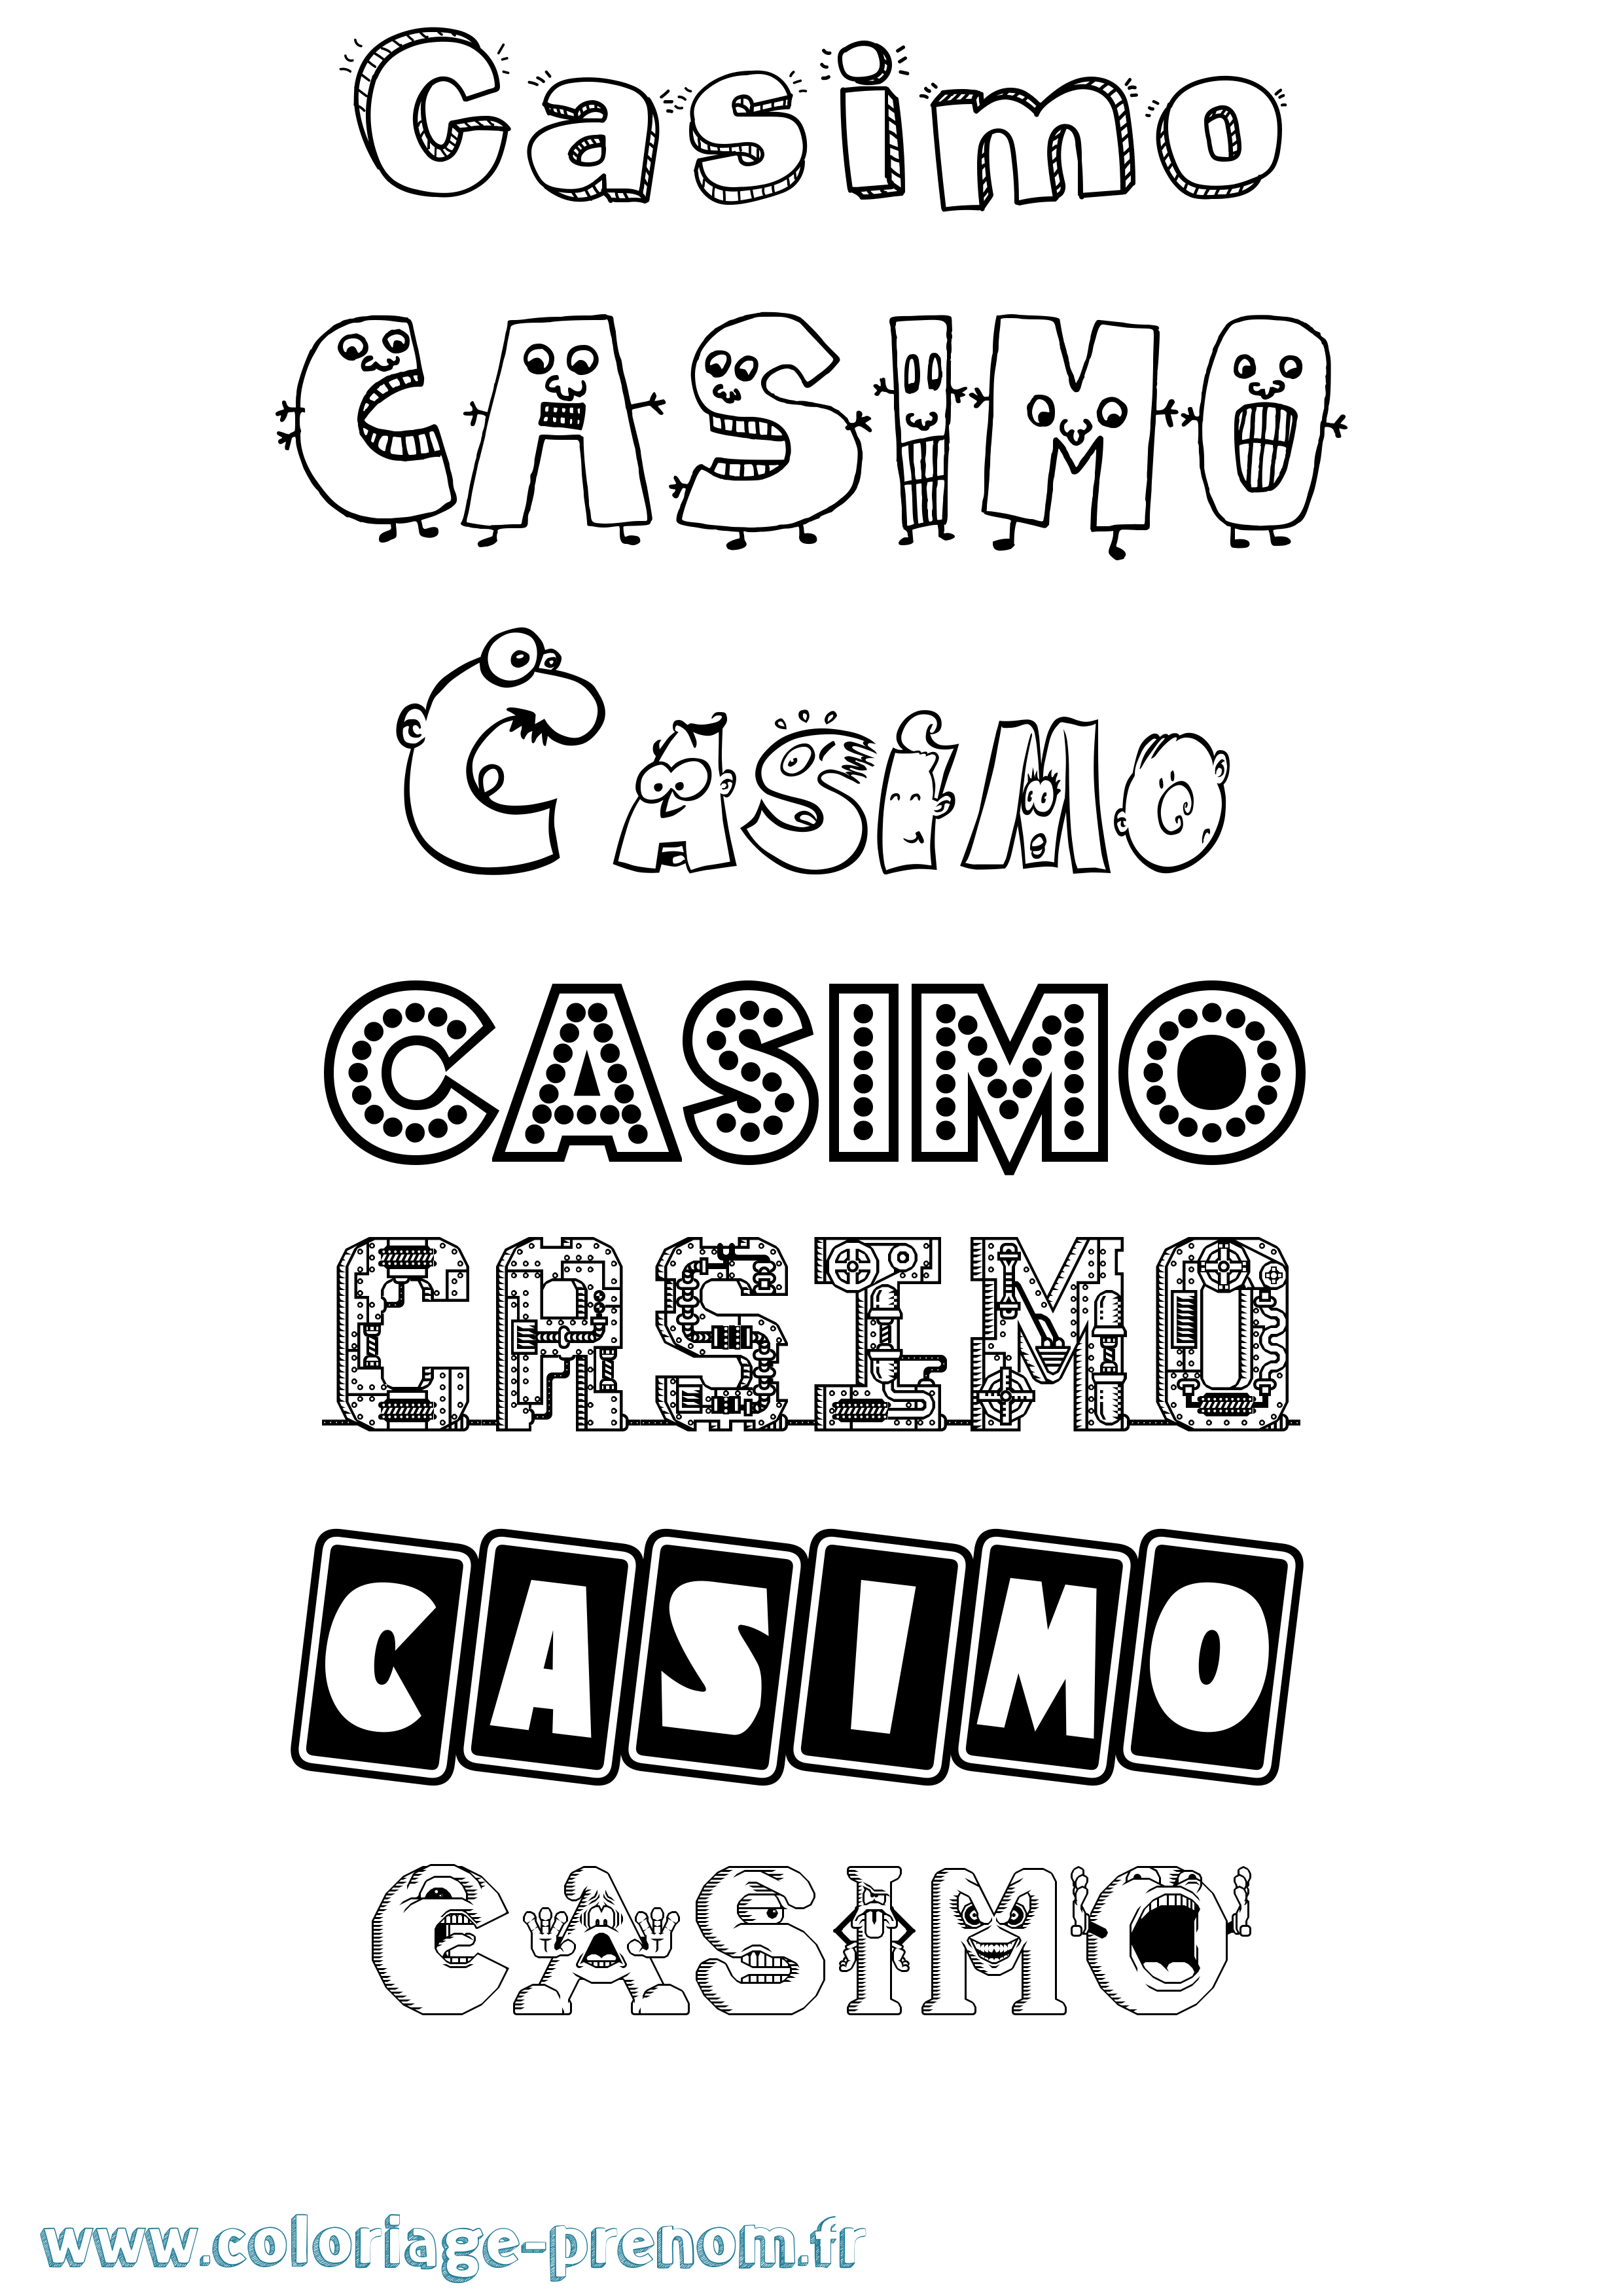 Coloriage prénom Casimo Fun